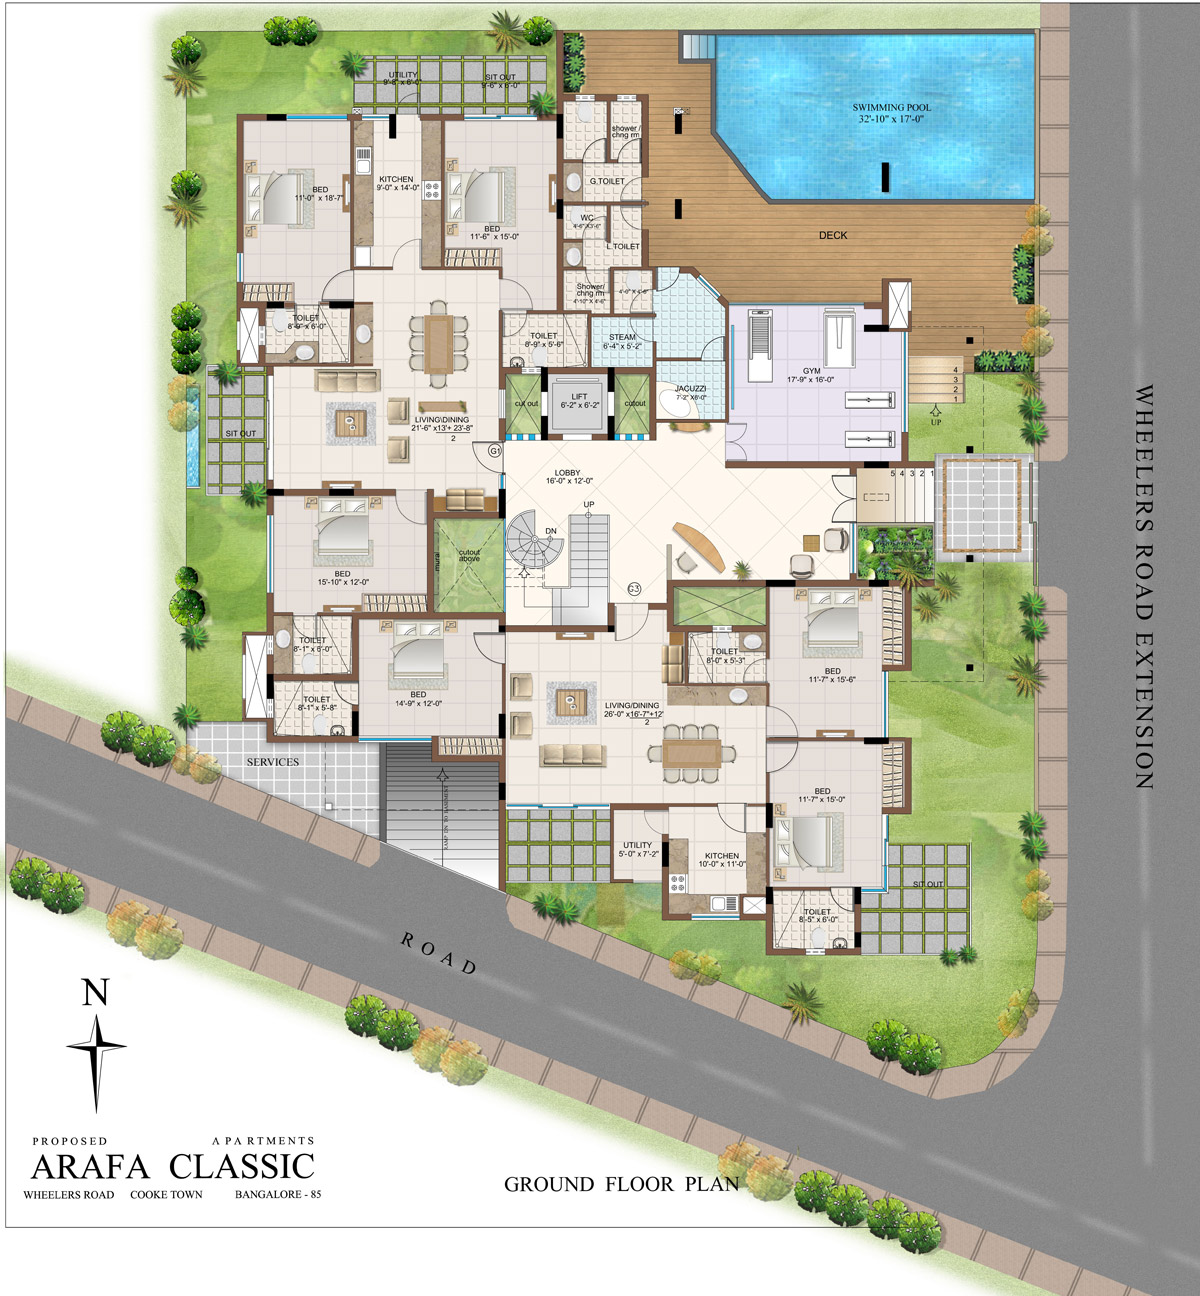 ARAFA CLASSIC - Typical Floor Plan